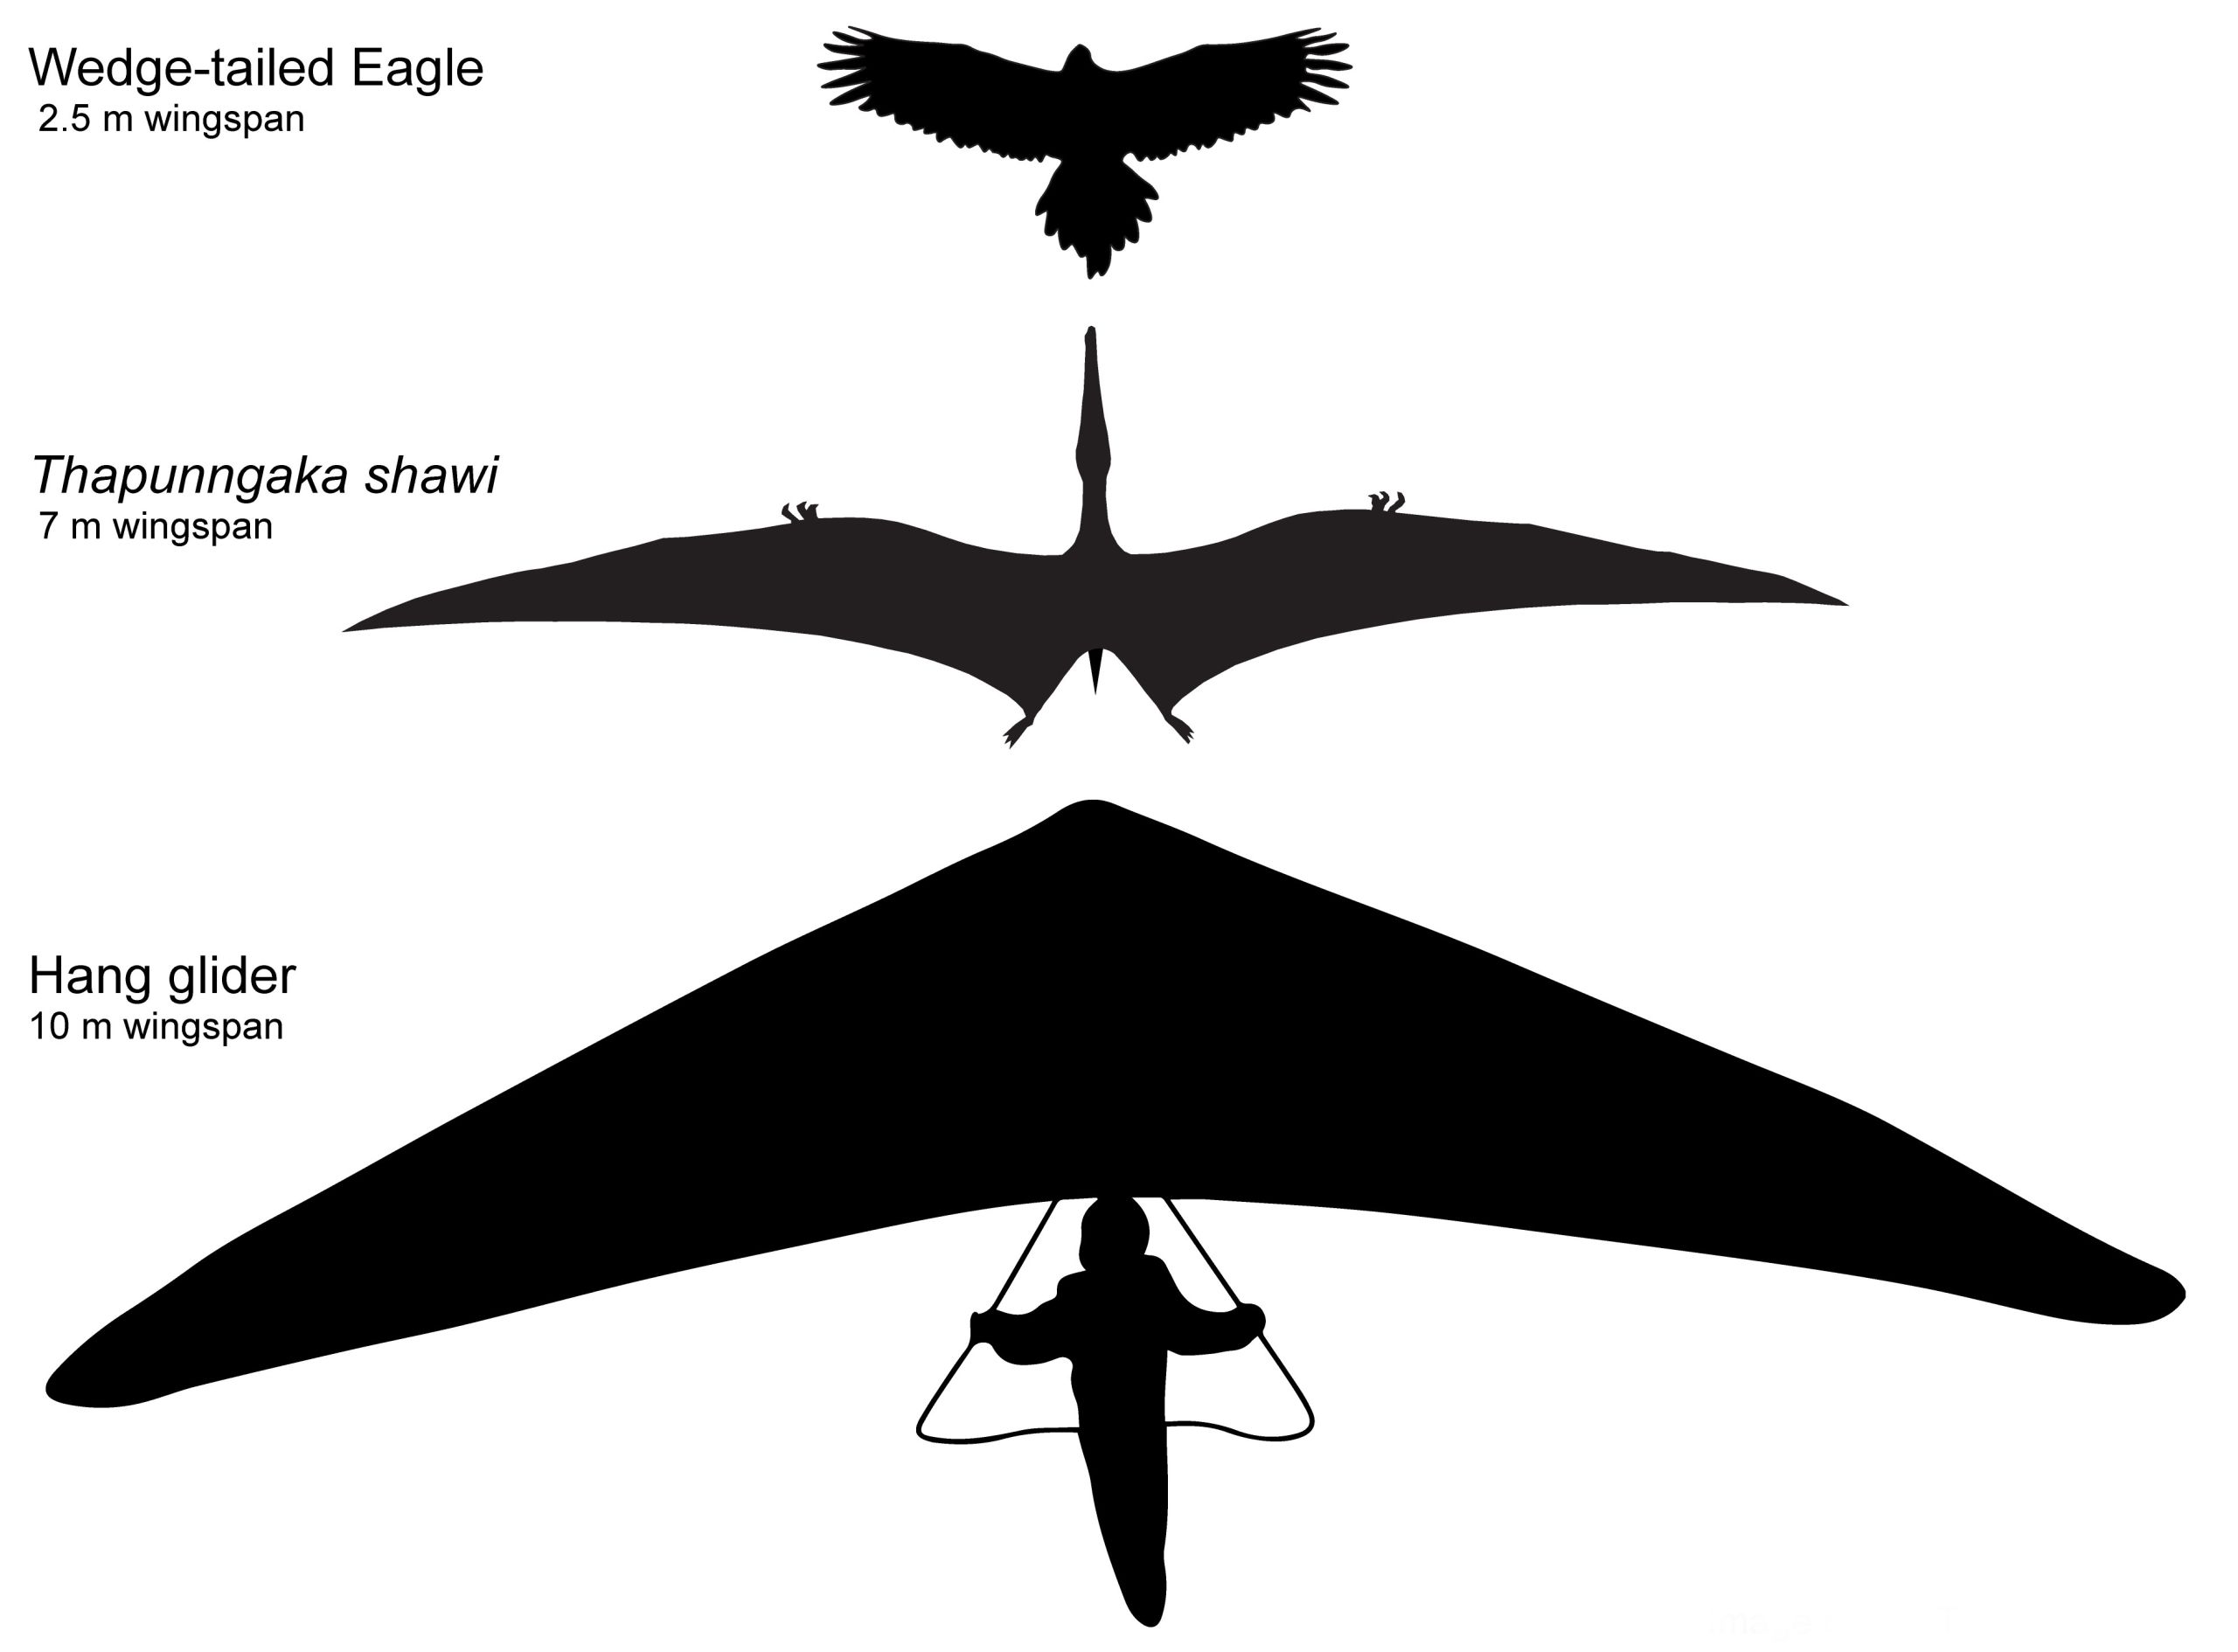 Гипотетический контур Тапуннгака шави с размахом крыльев 7 м, рядом с клинохвостым орлом (размах крыльев 2.5 м) и дельтапланом (размах крыльев 10 м). Тим Ричардс